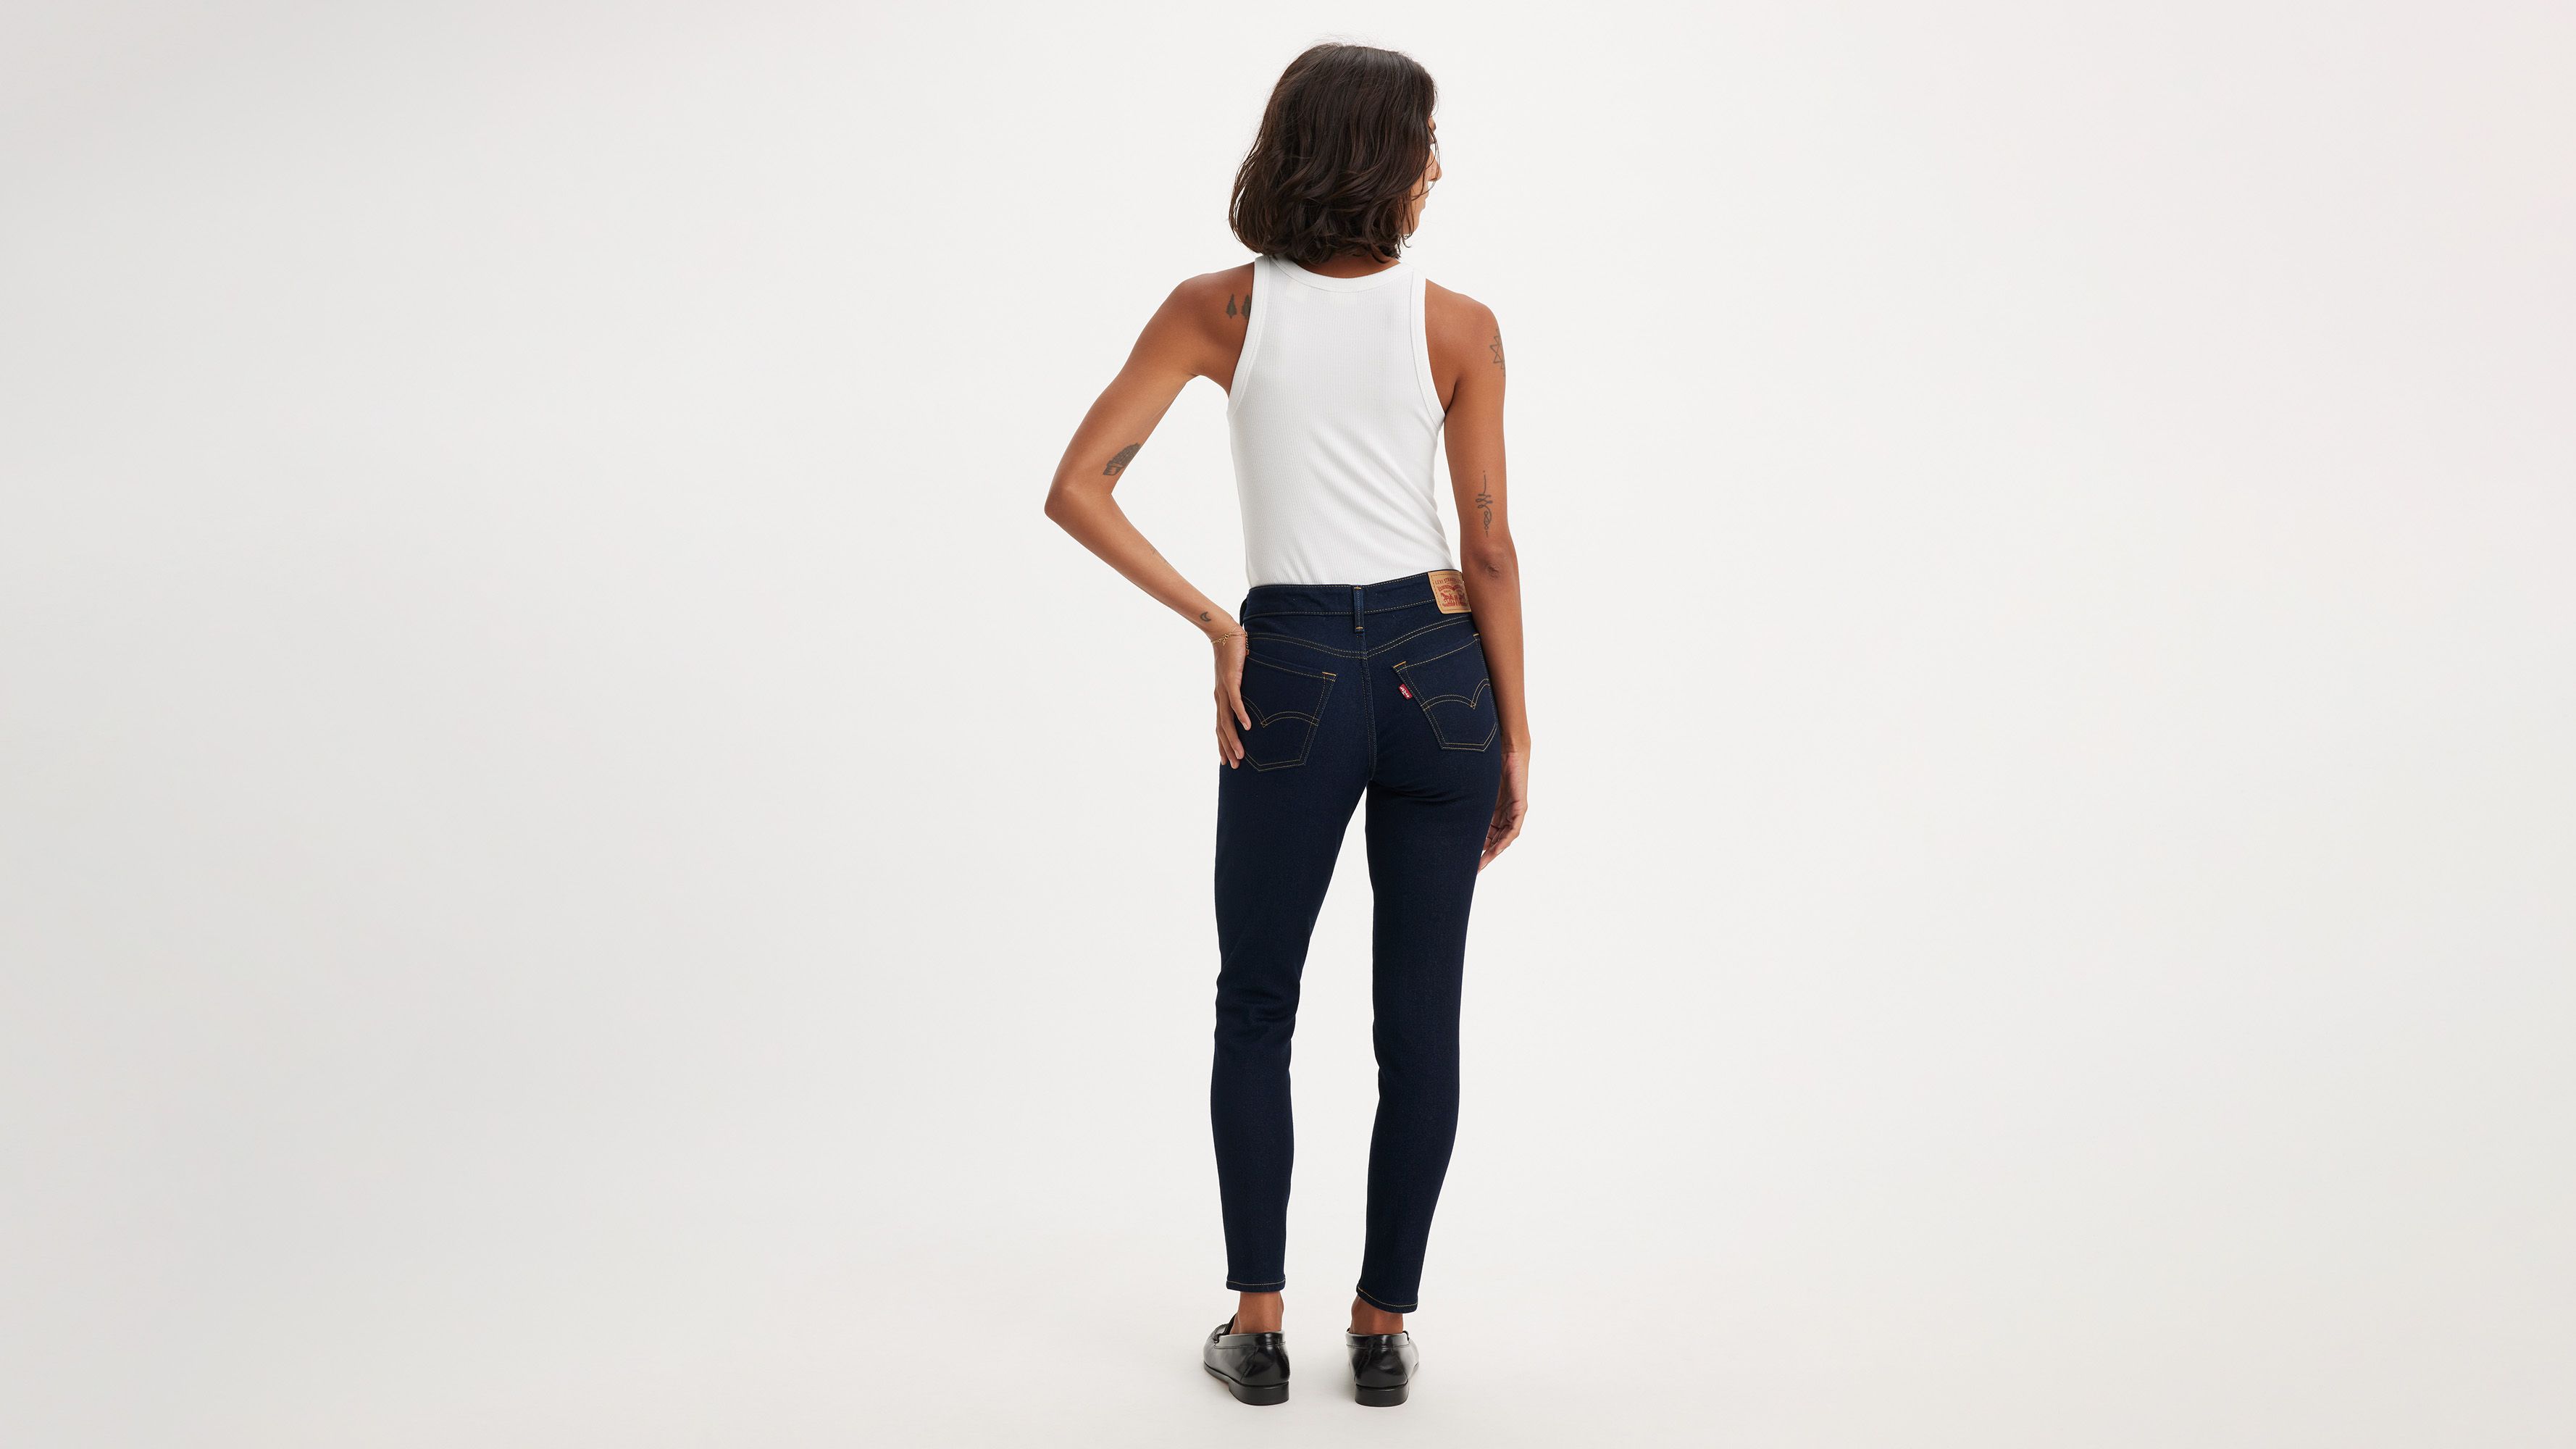 711 Skinny Women's Jeans - Dark Wash | Levi's® US